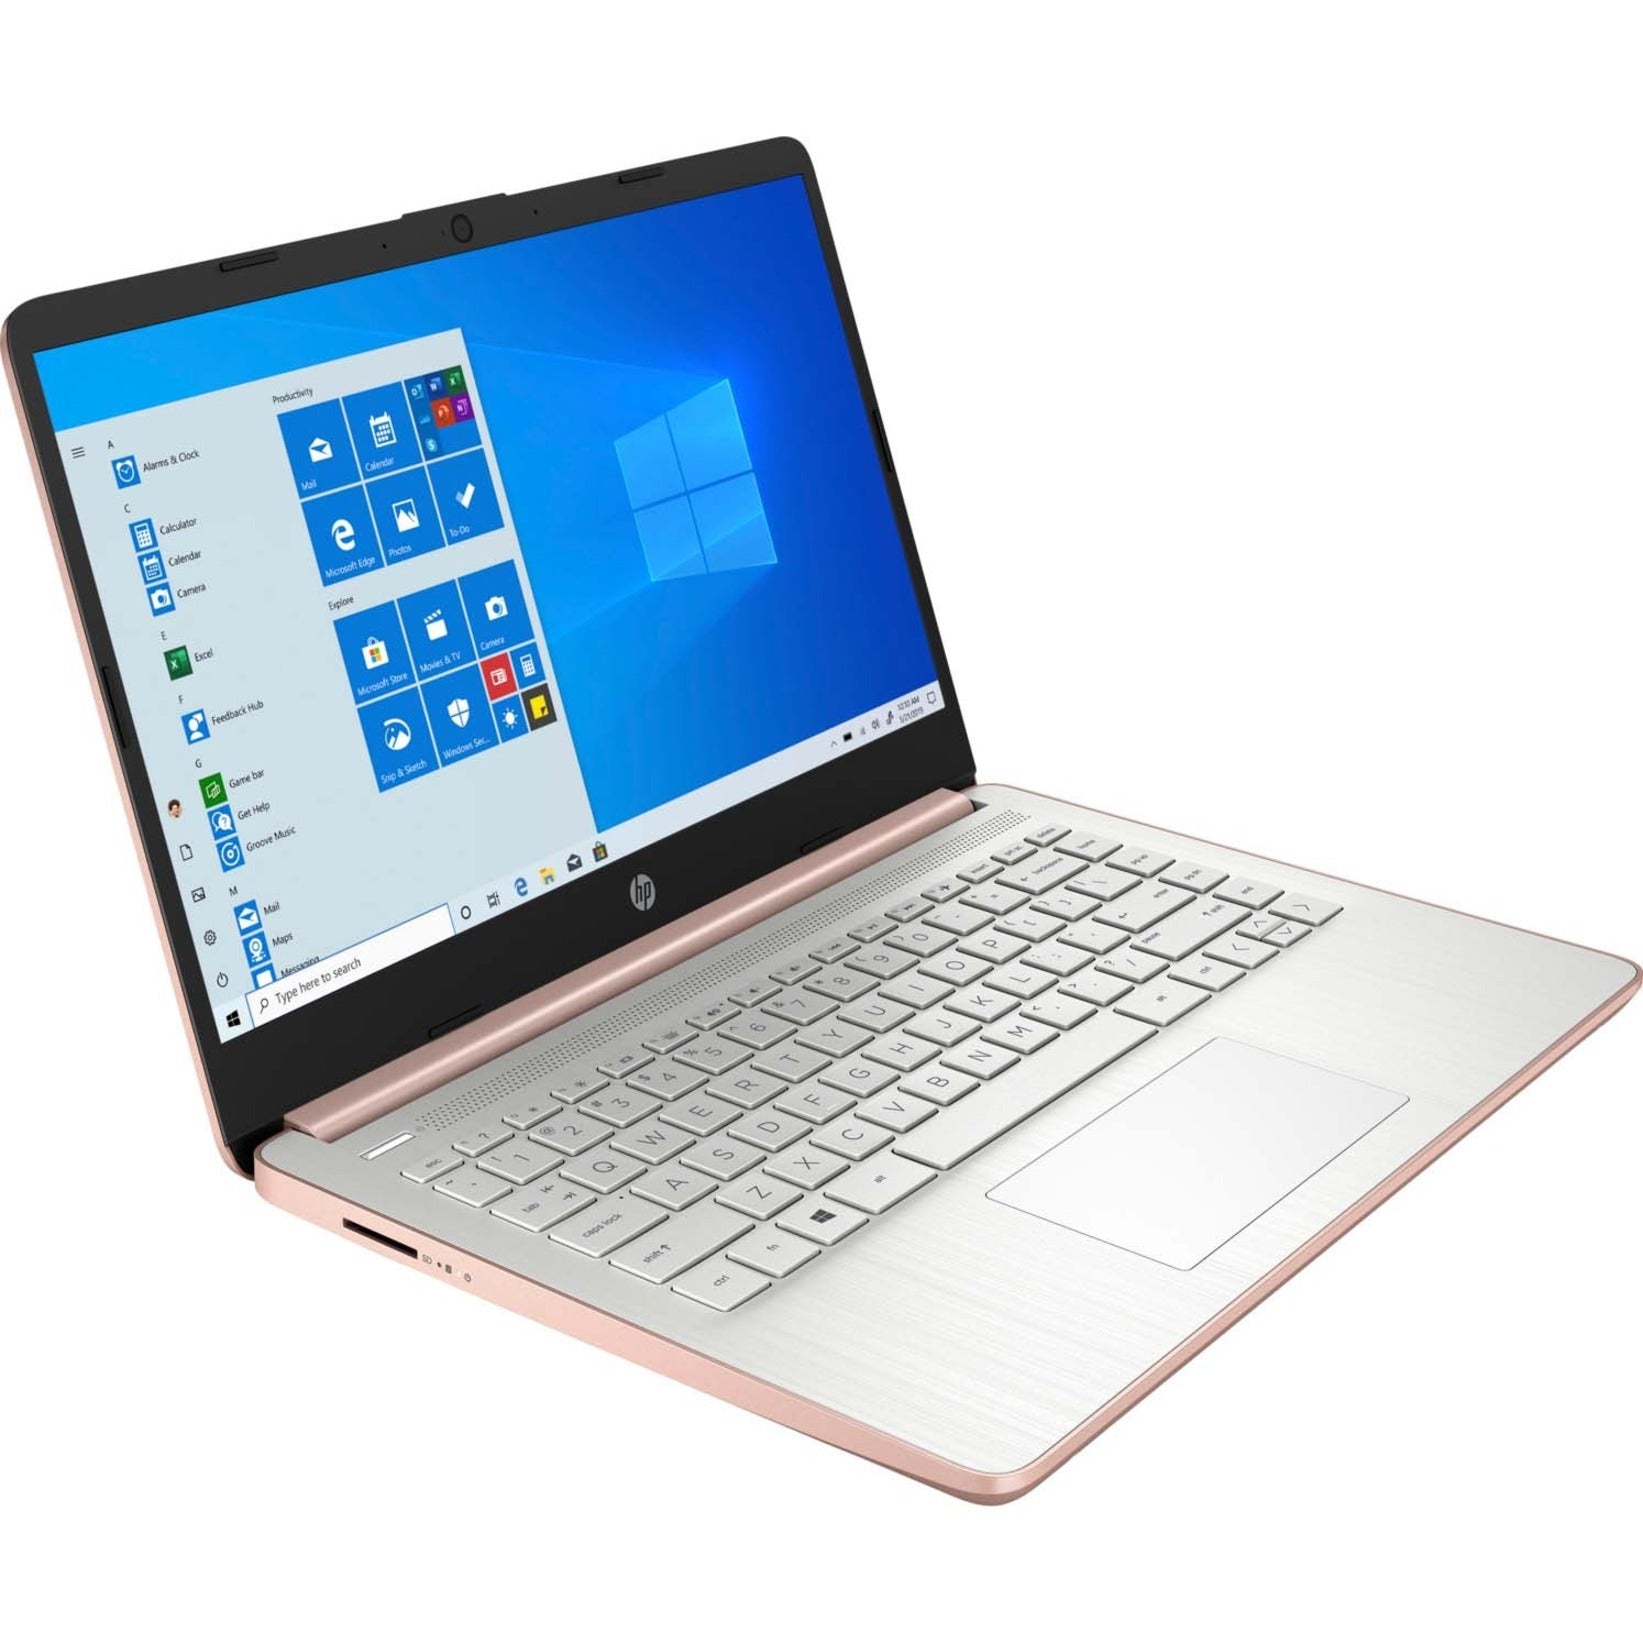 HP Laptop 14-dq0070nr 14 Touchscreen Notebook, Intel Celeron N4020, 4GB RAM, 64GB Flash Memory, Windows 10 Home in S mode